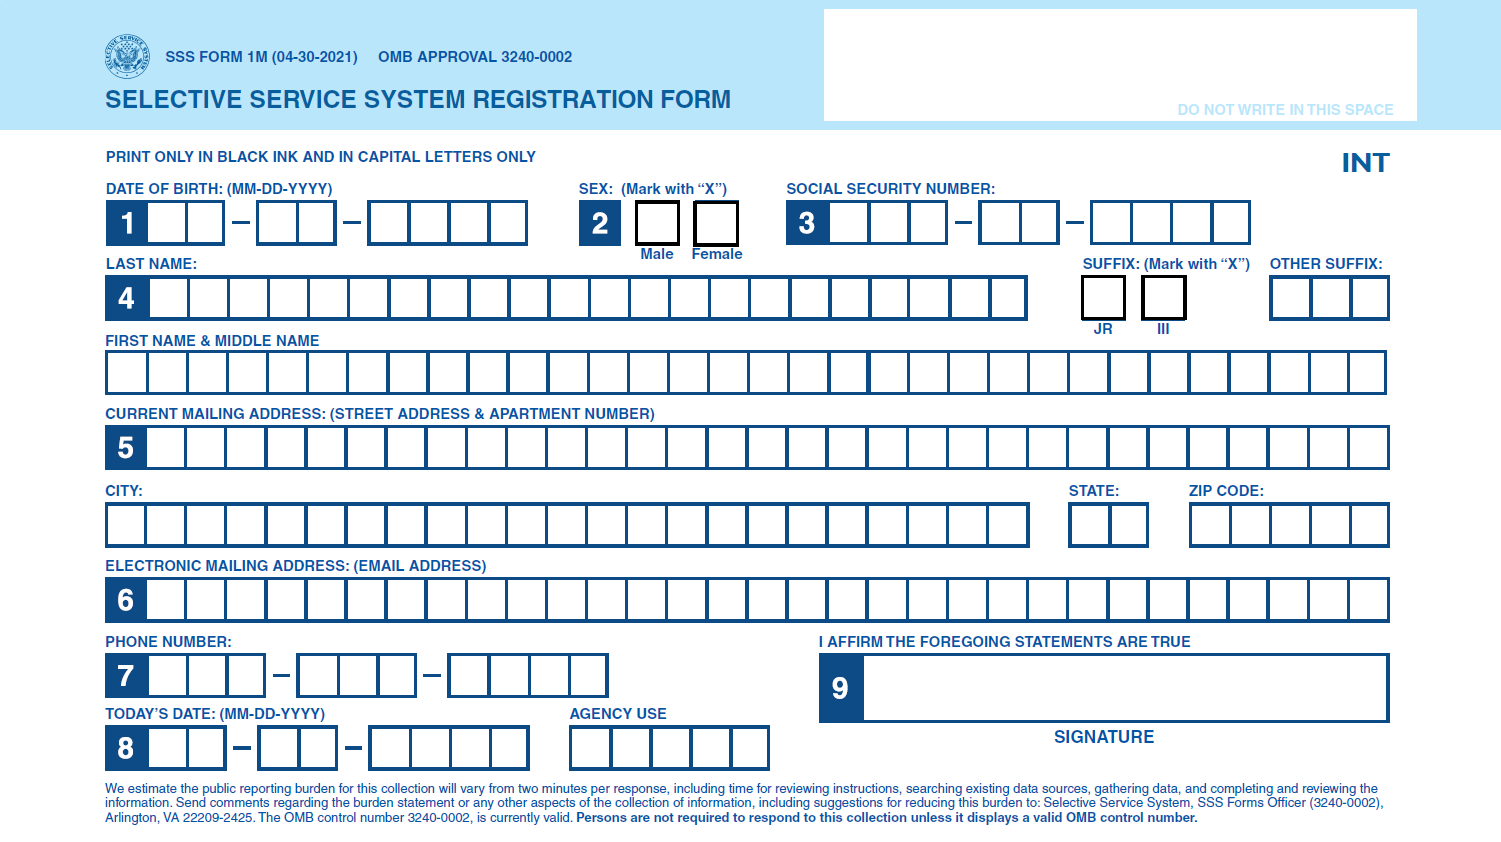 Source: Selective Service System, Selective Service System Registration Form